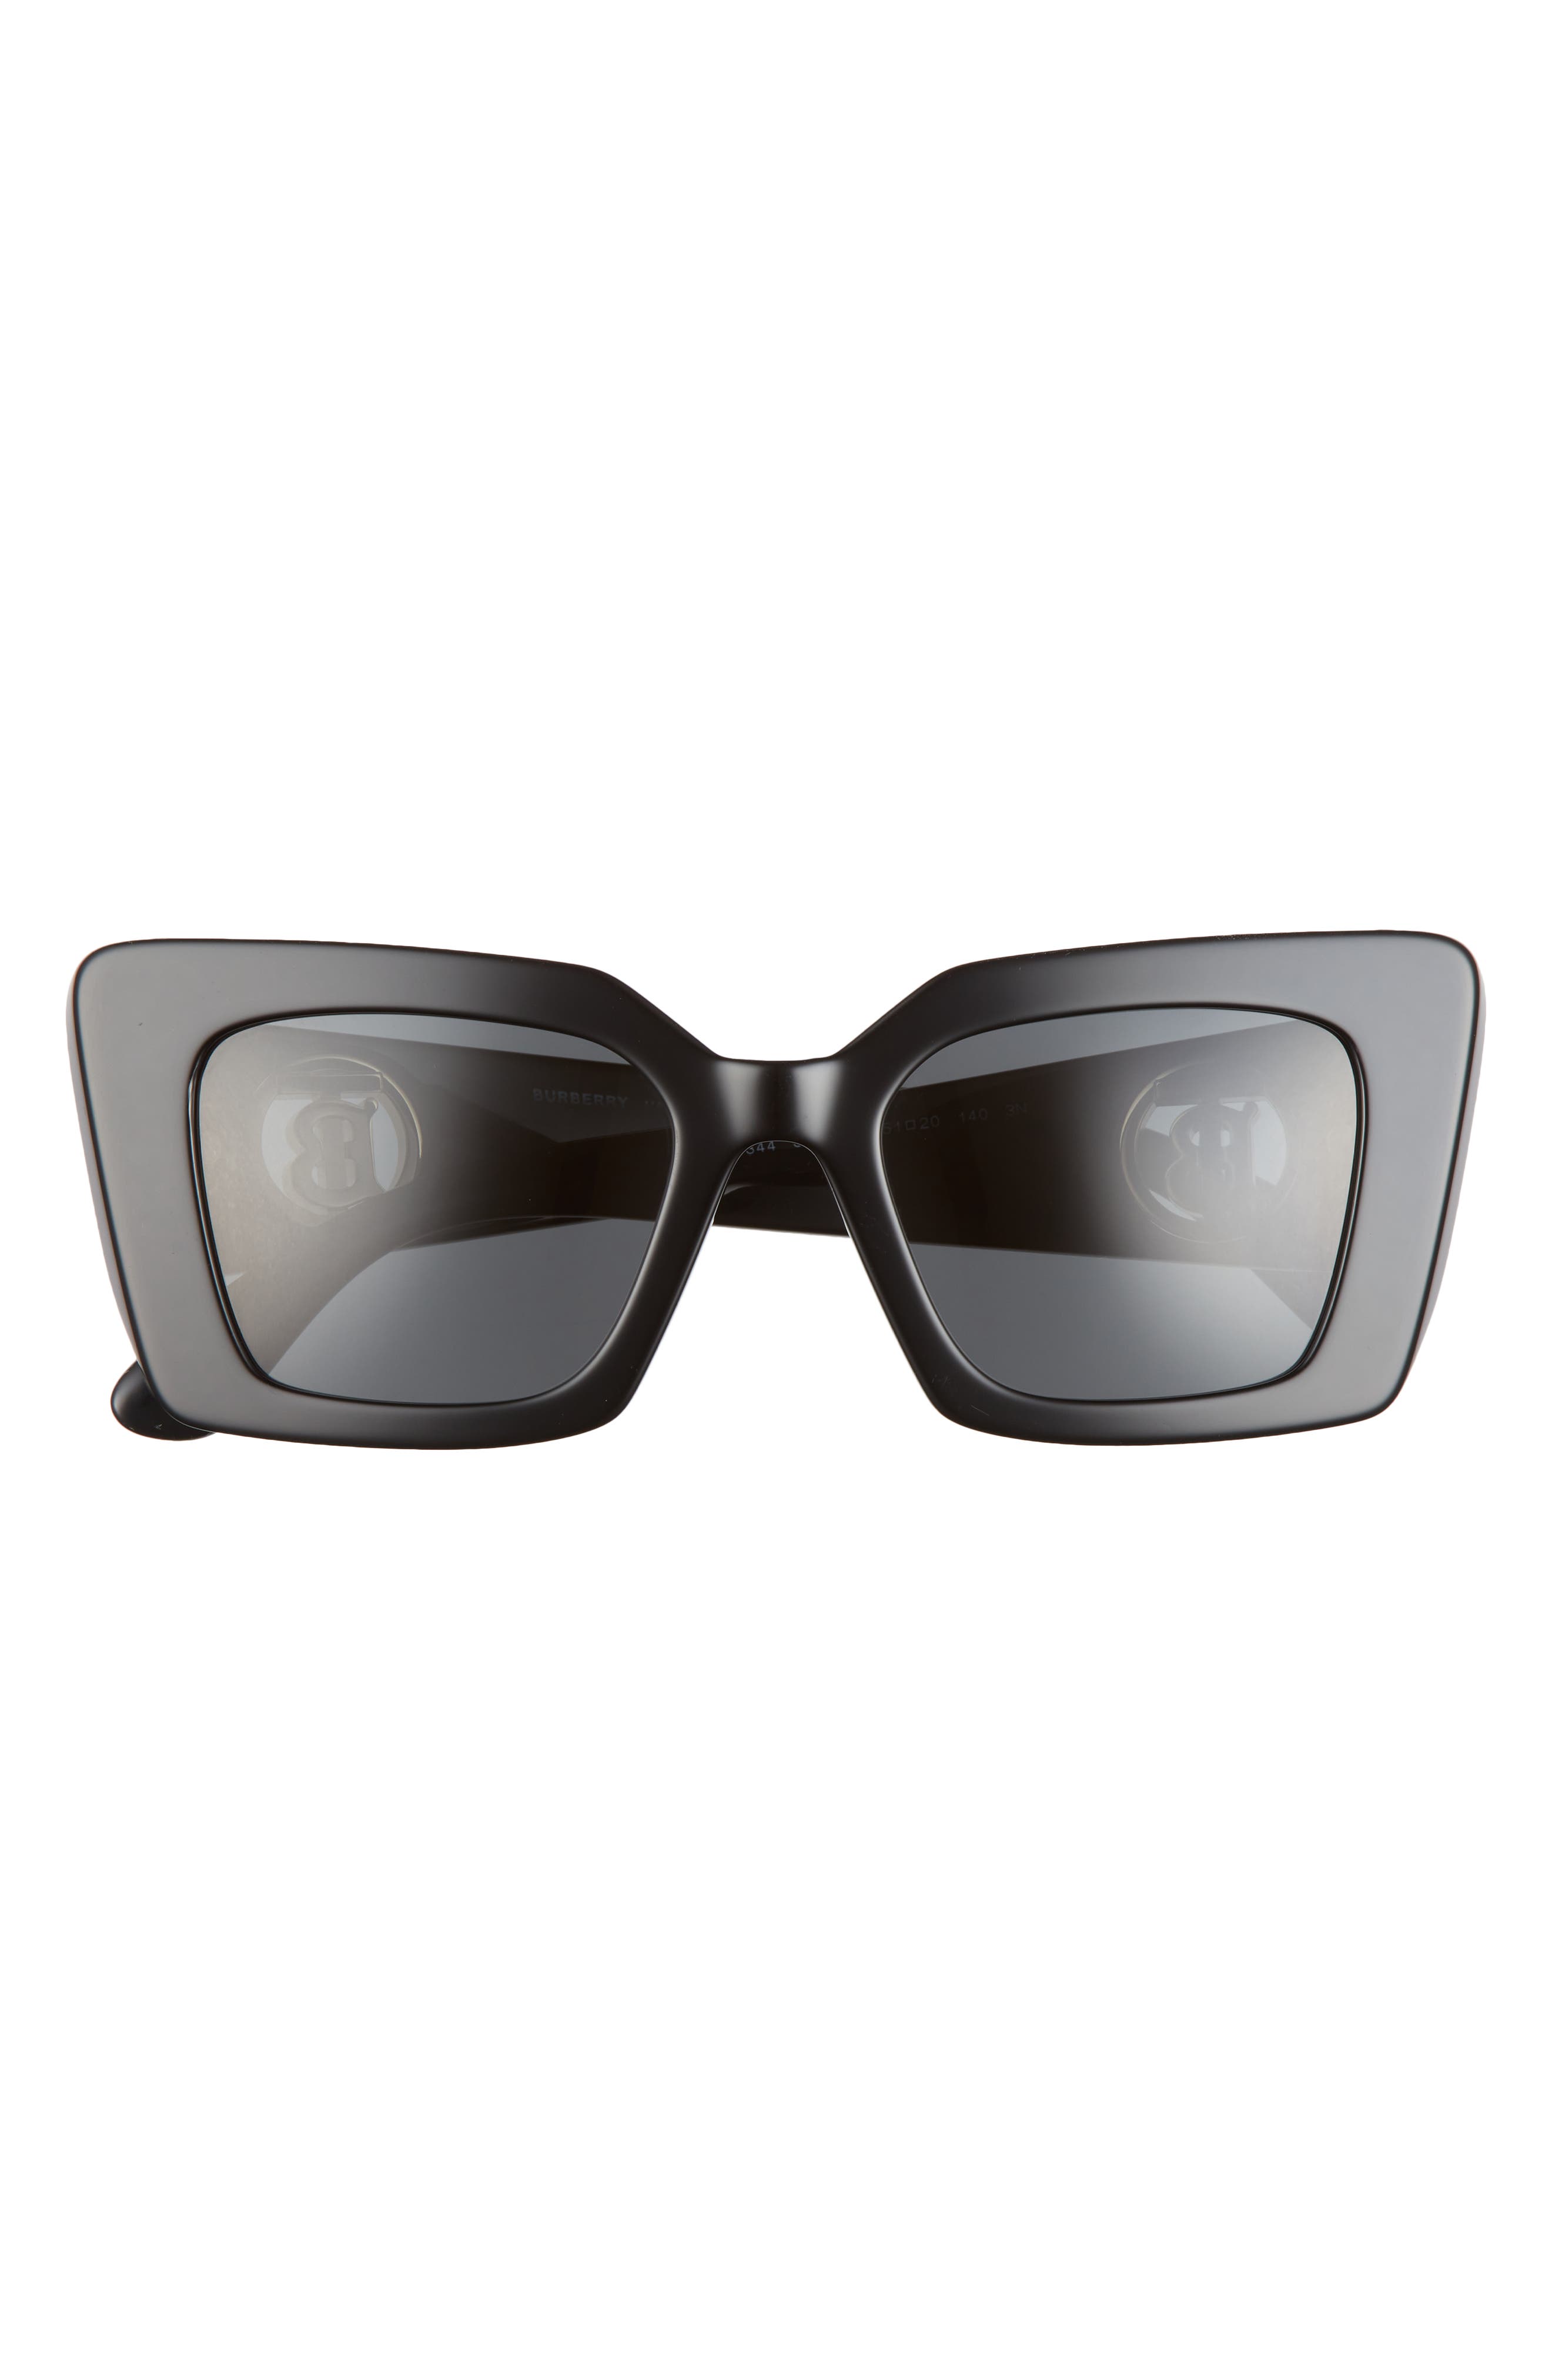 Burberry 51mm Square Sunglasses in Black/Dark Grey at Nordstrom